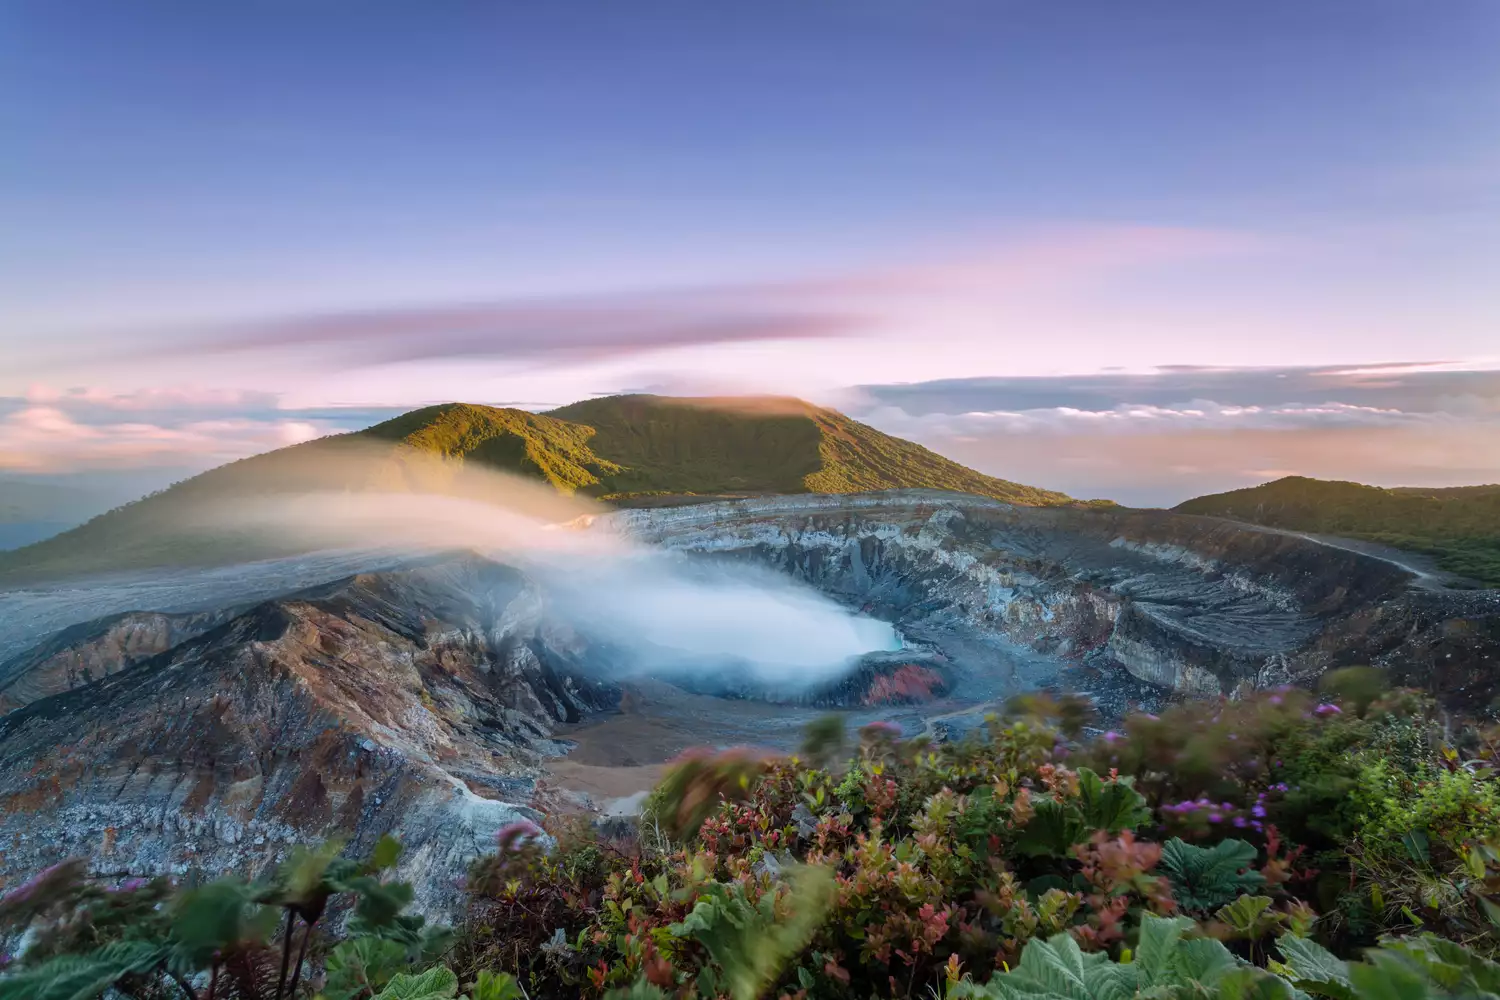 Вид с высоты на кратер в Коста-Рике, выбрасывающий дым на закате солнца